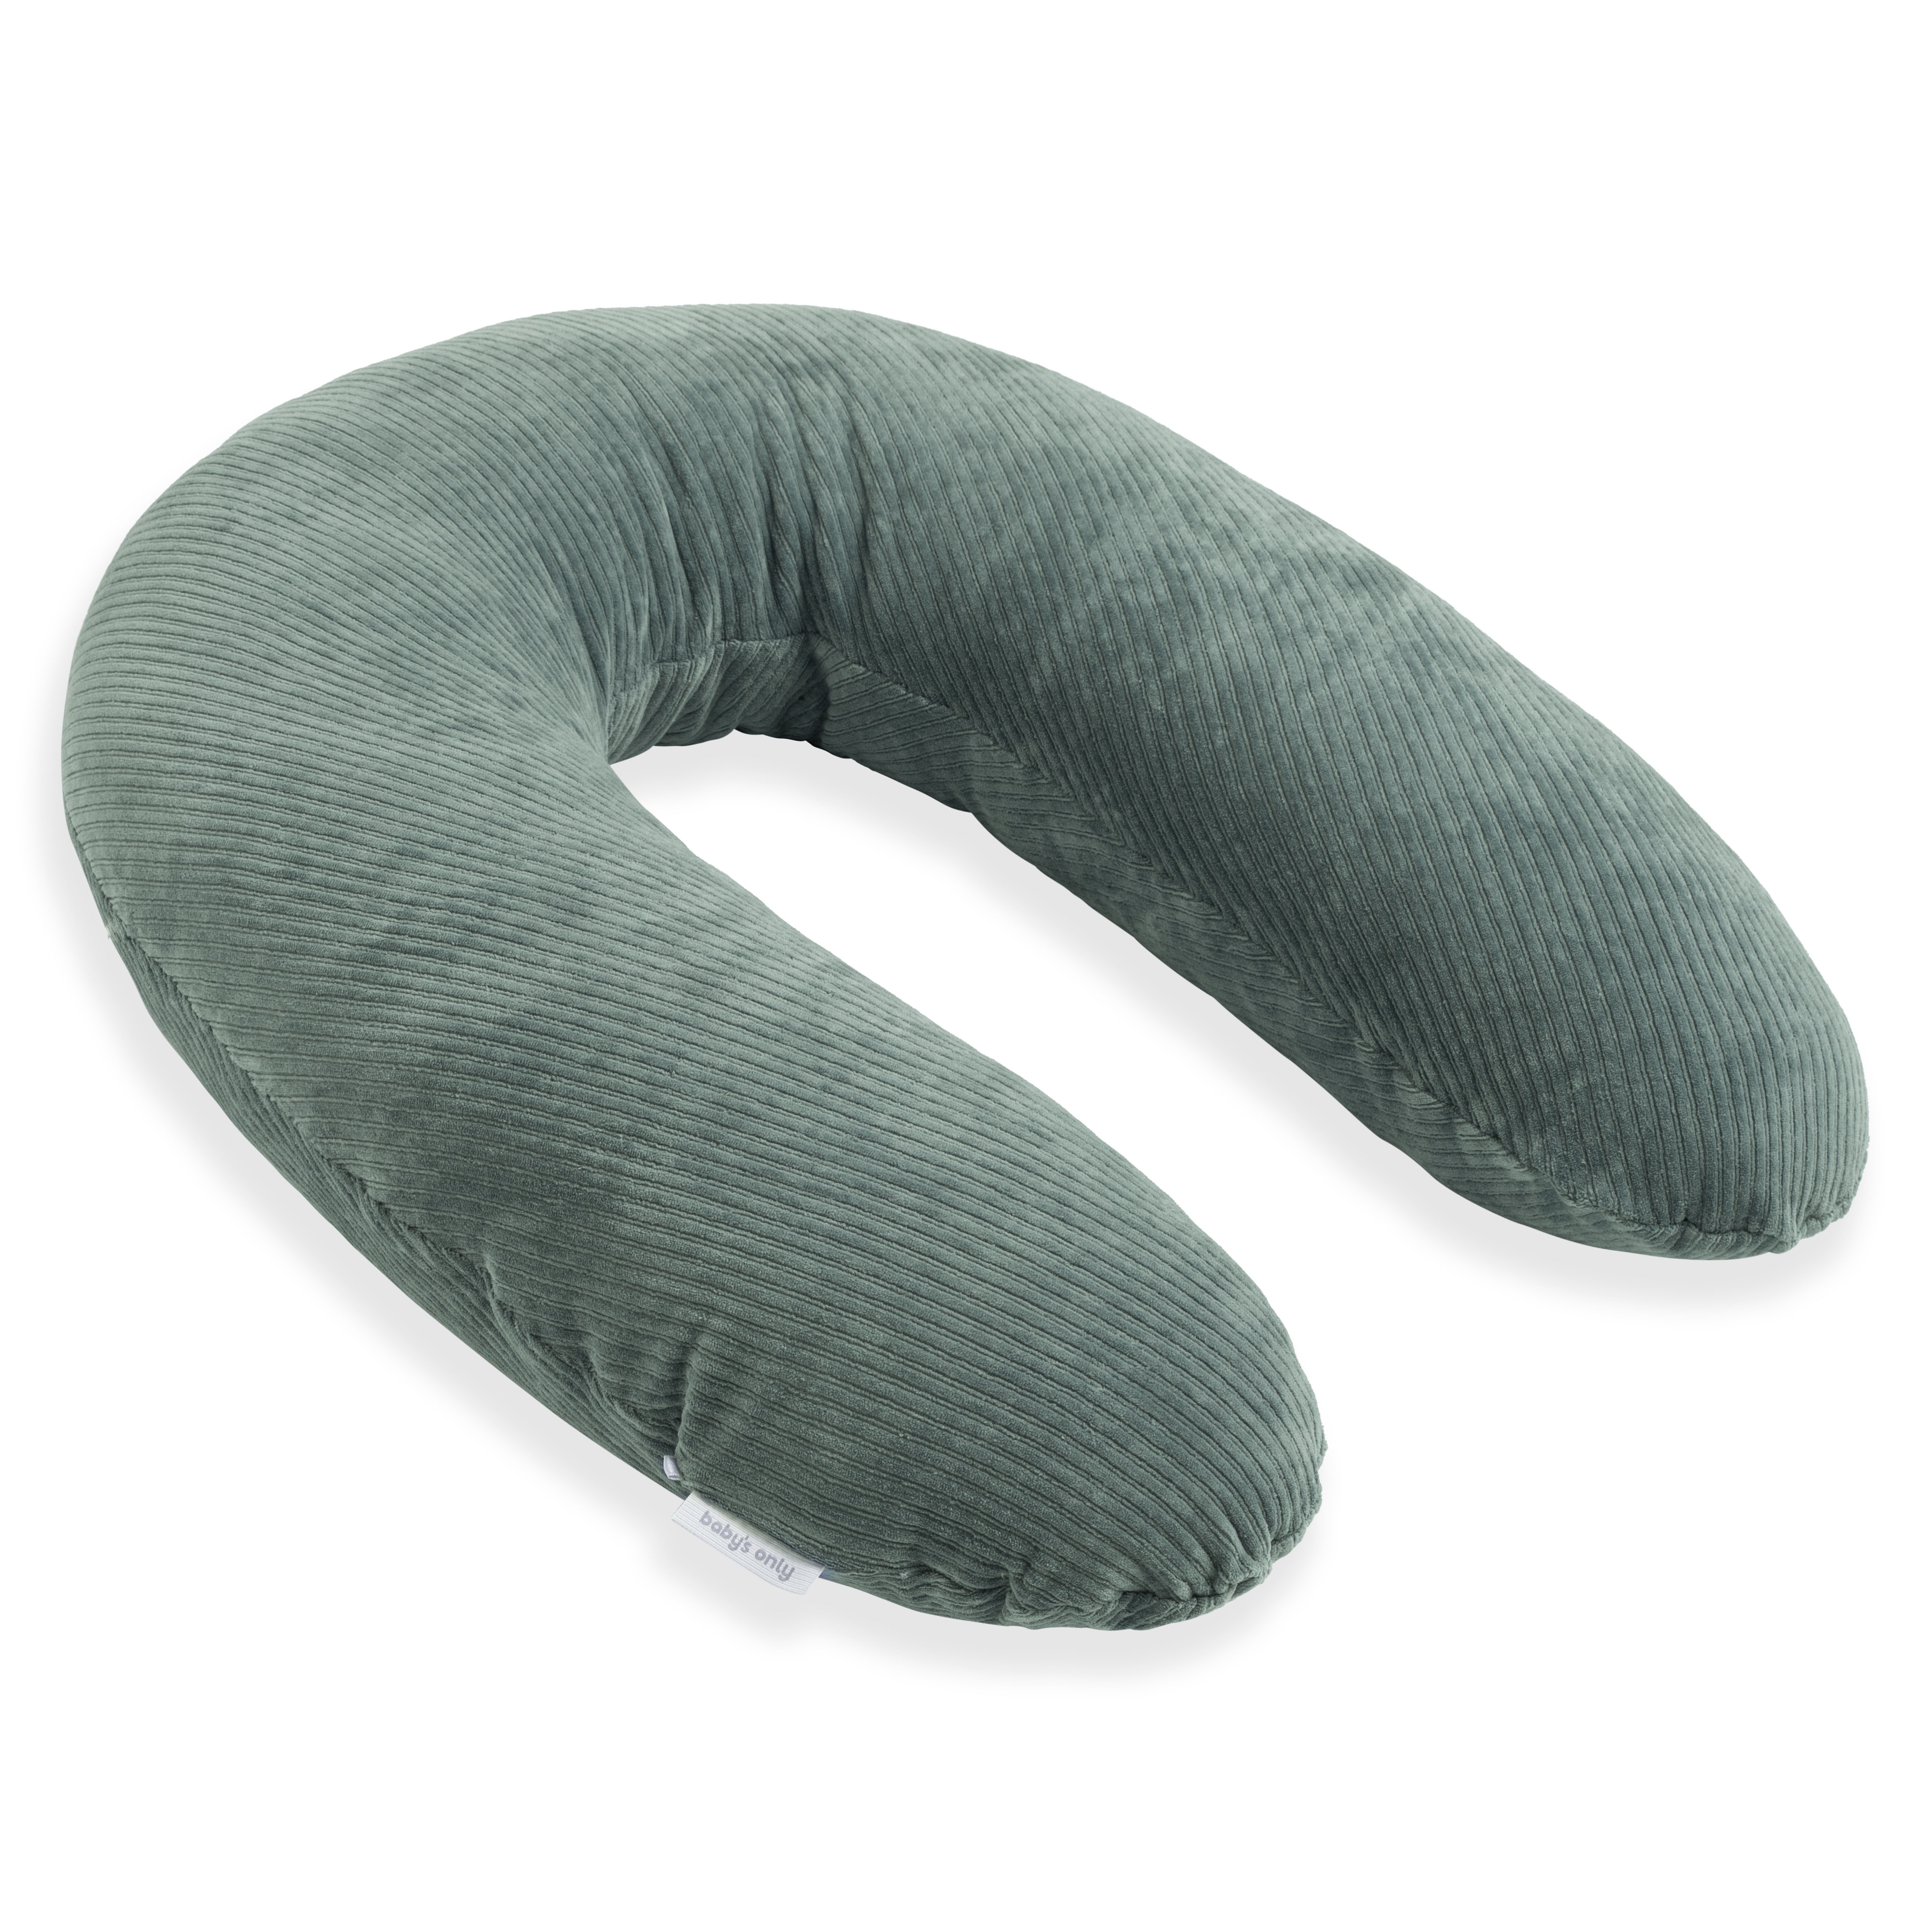 Nursing pillow Sense sea green